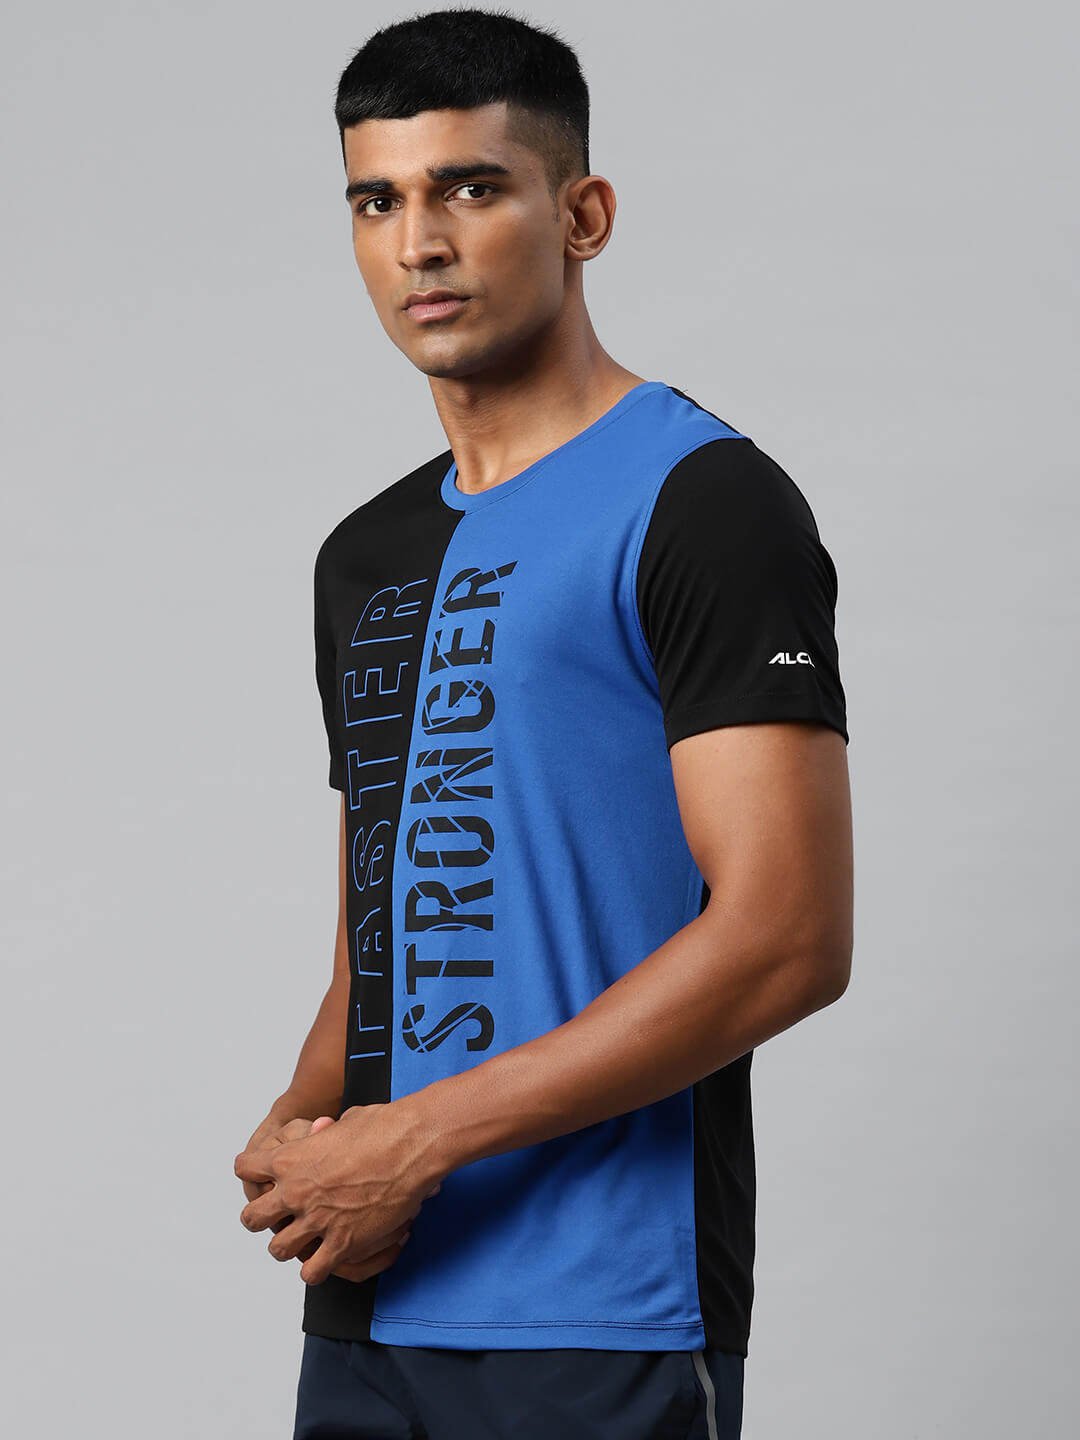 Alcis Men Typography Printed Colourblocked Dry Tech Slim Fit Sports T-shirt